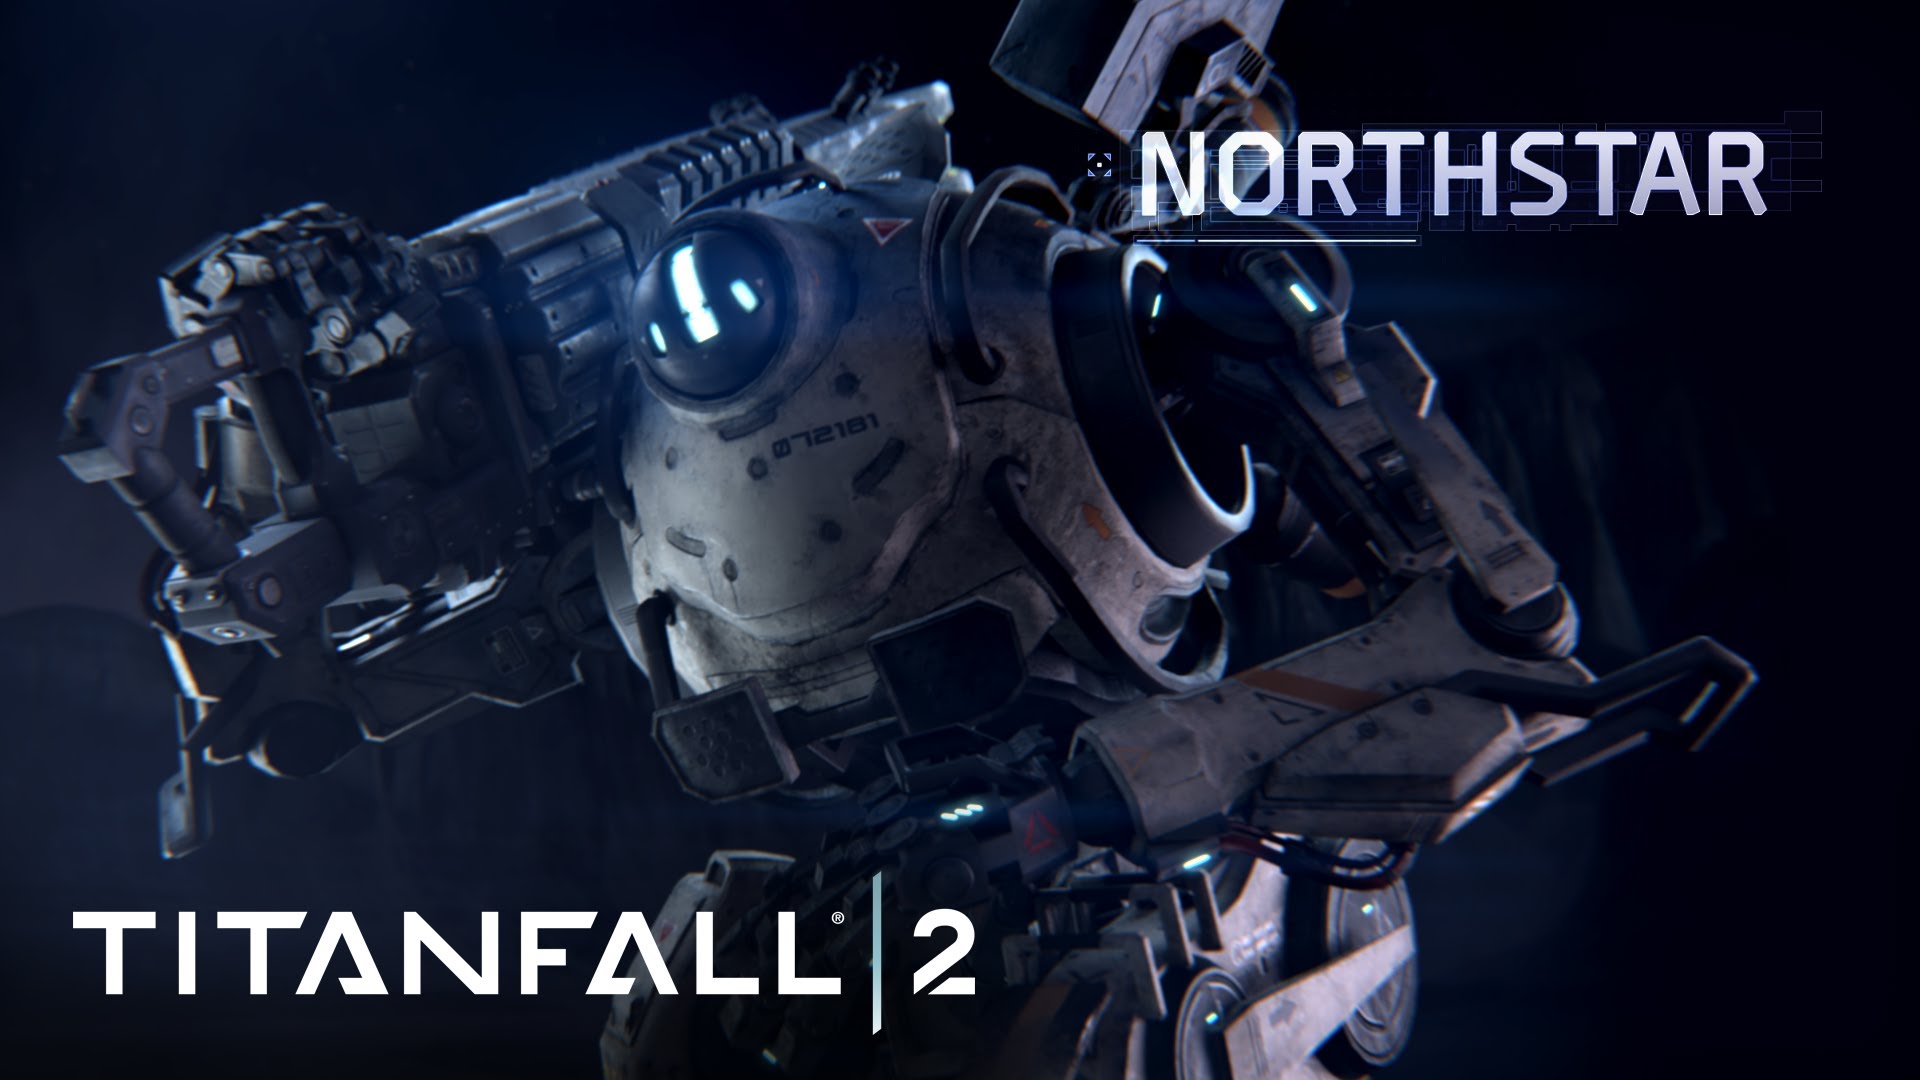 Titanfall 2, Northstar